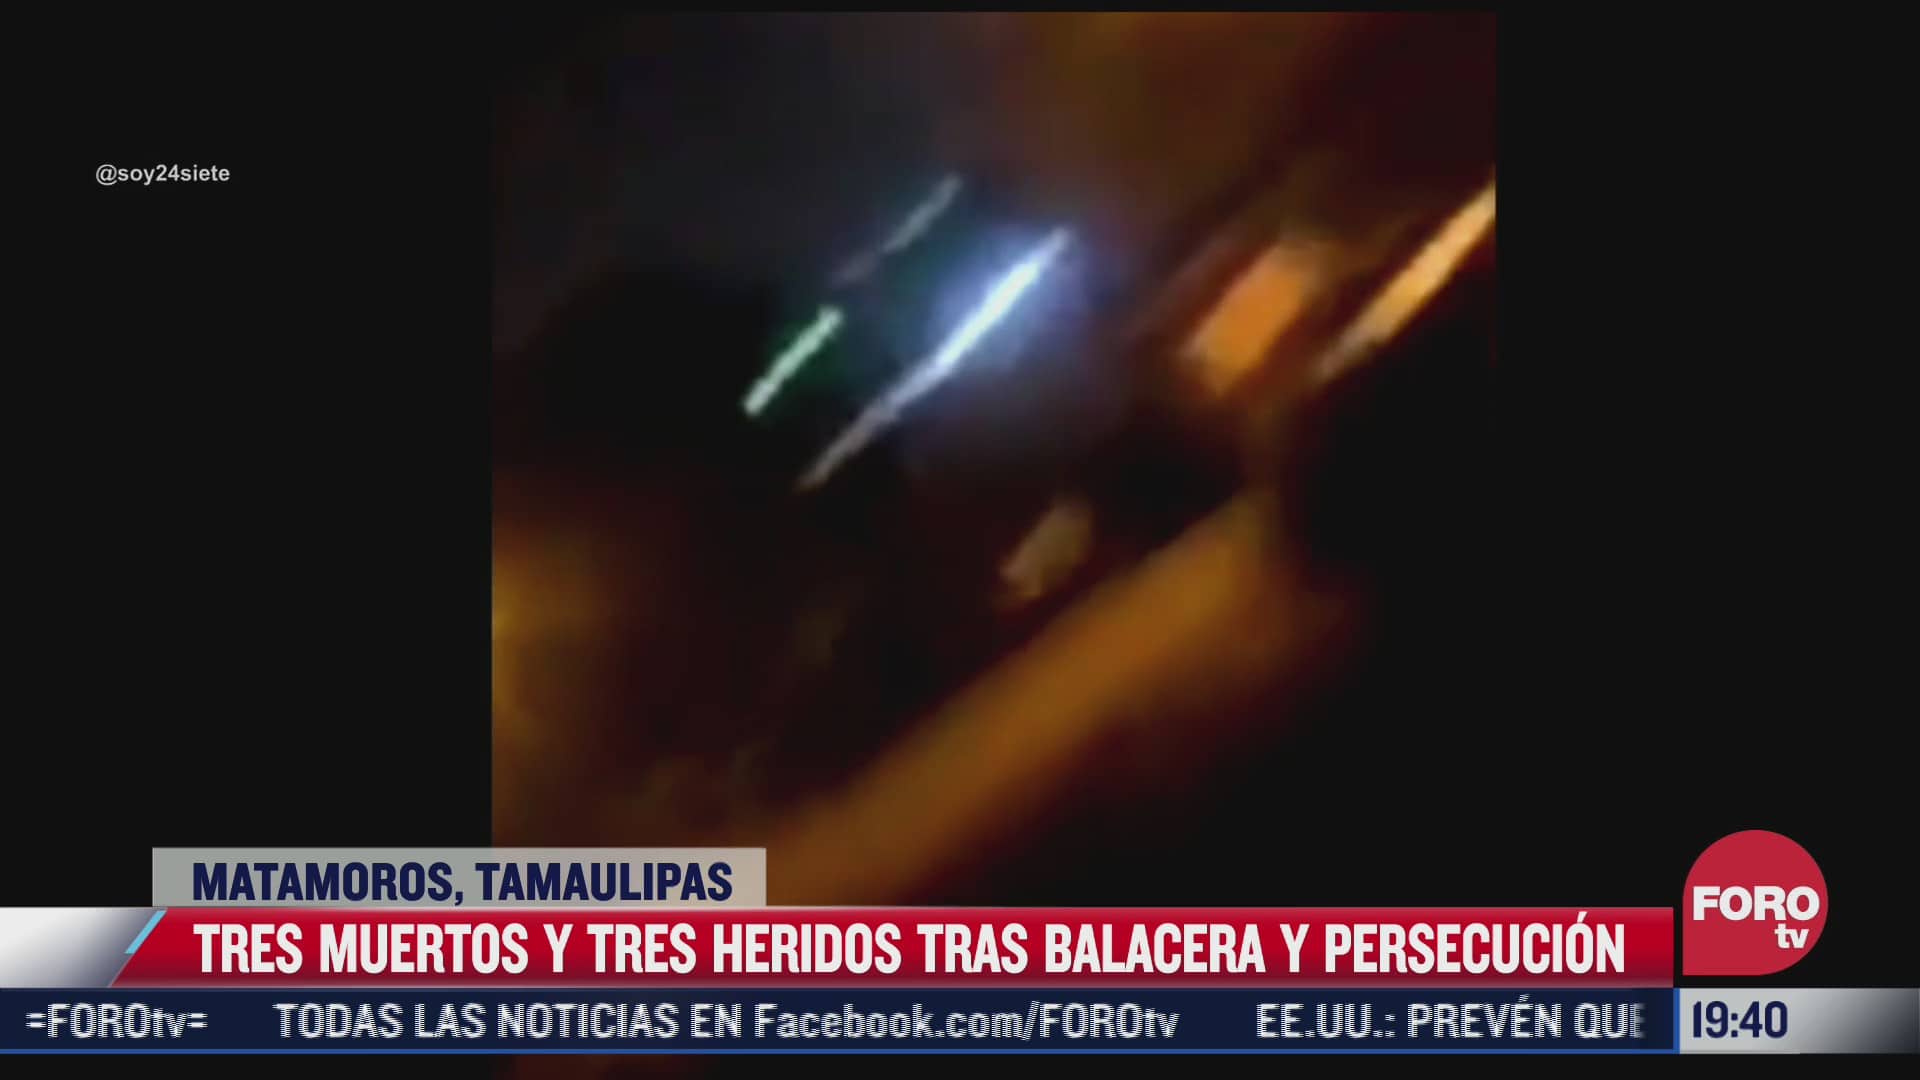 tres muertos por por balacera en matamoros tamaulipas